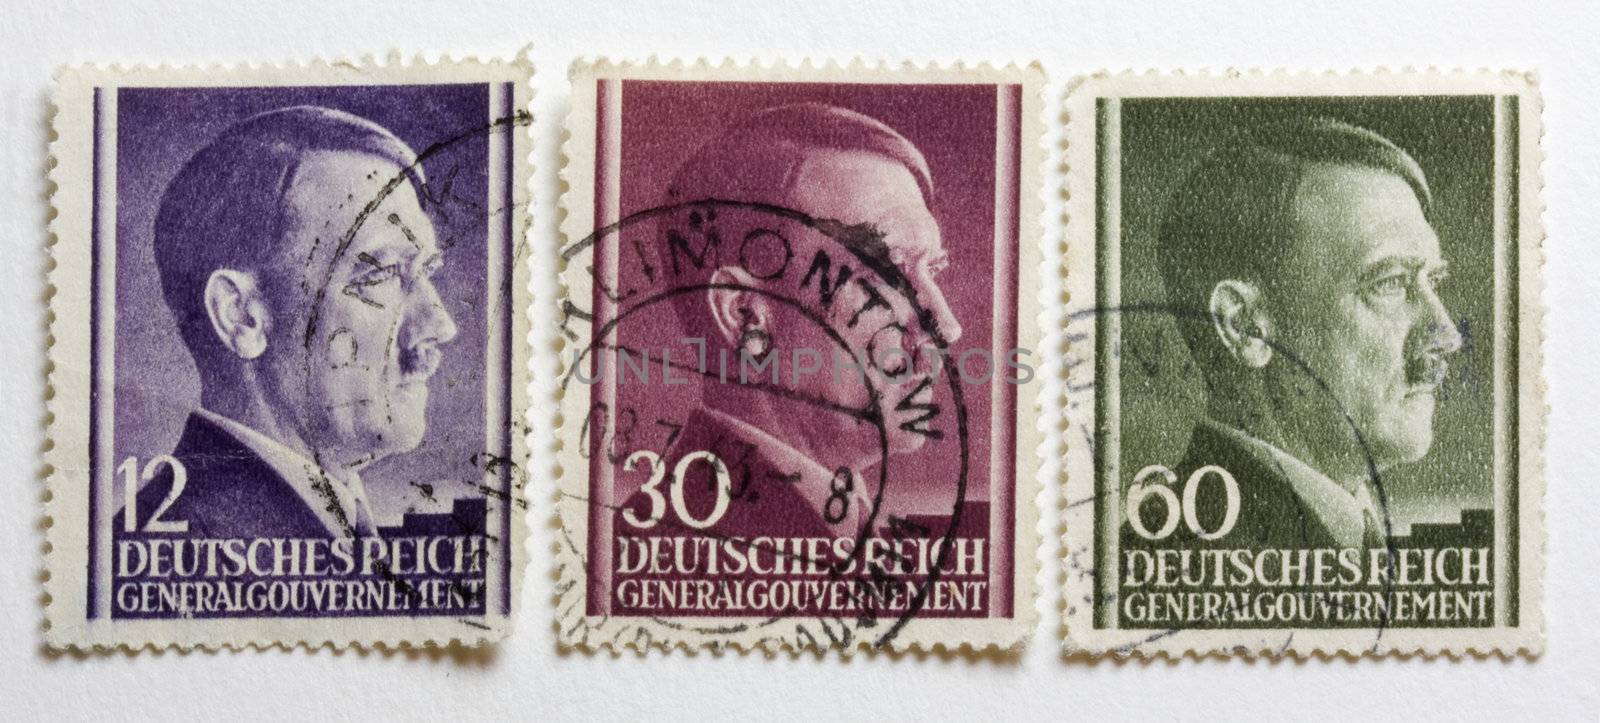 Adolf Hitler portrait on three German World War II post stamps by PixelsAway